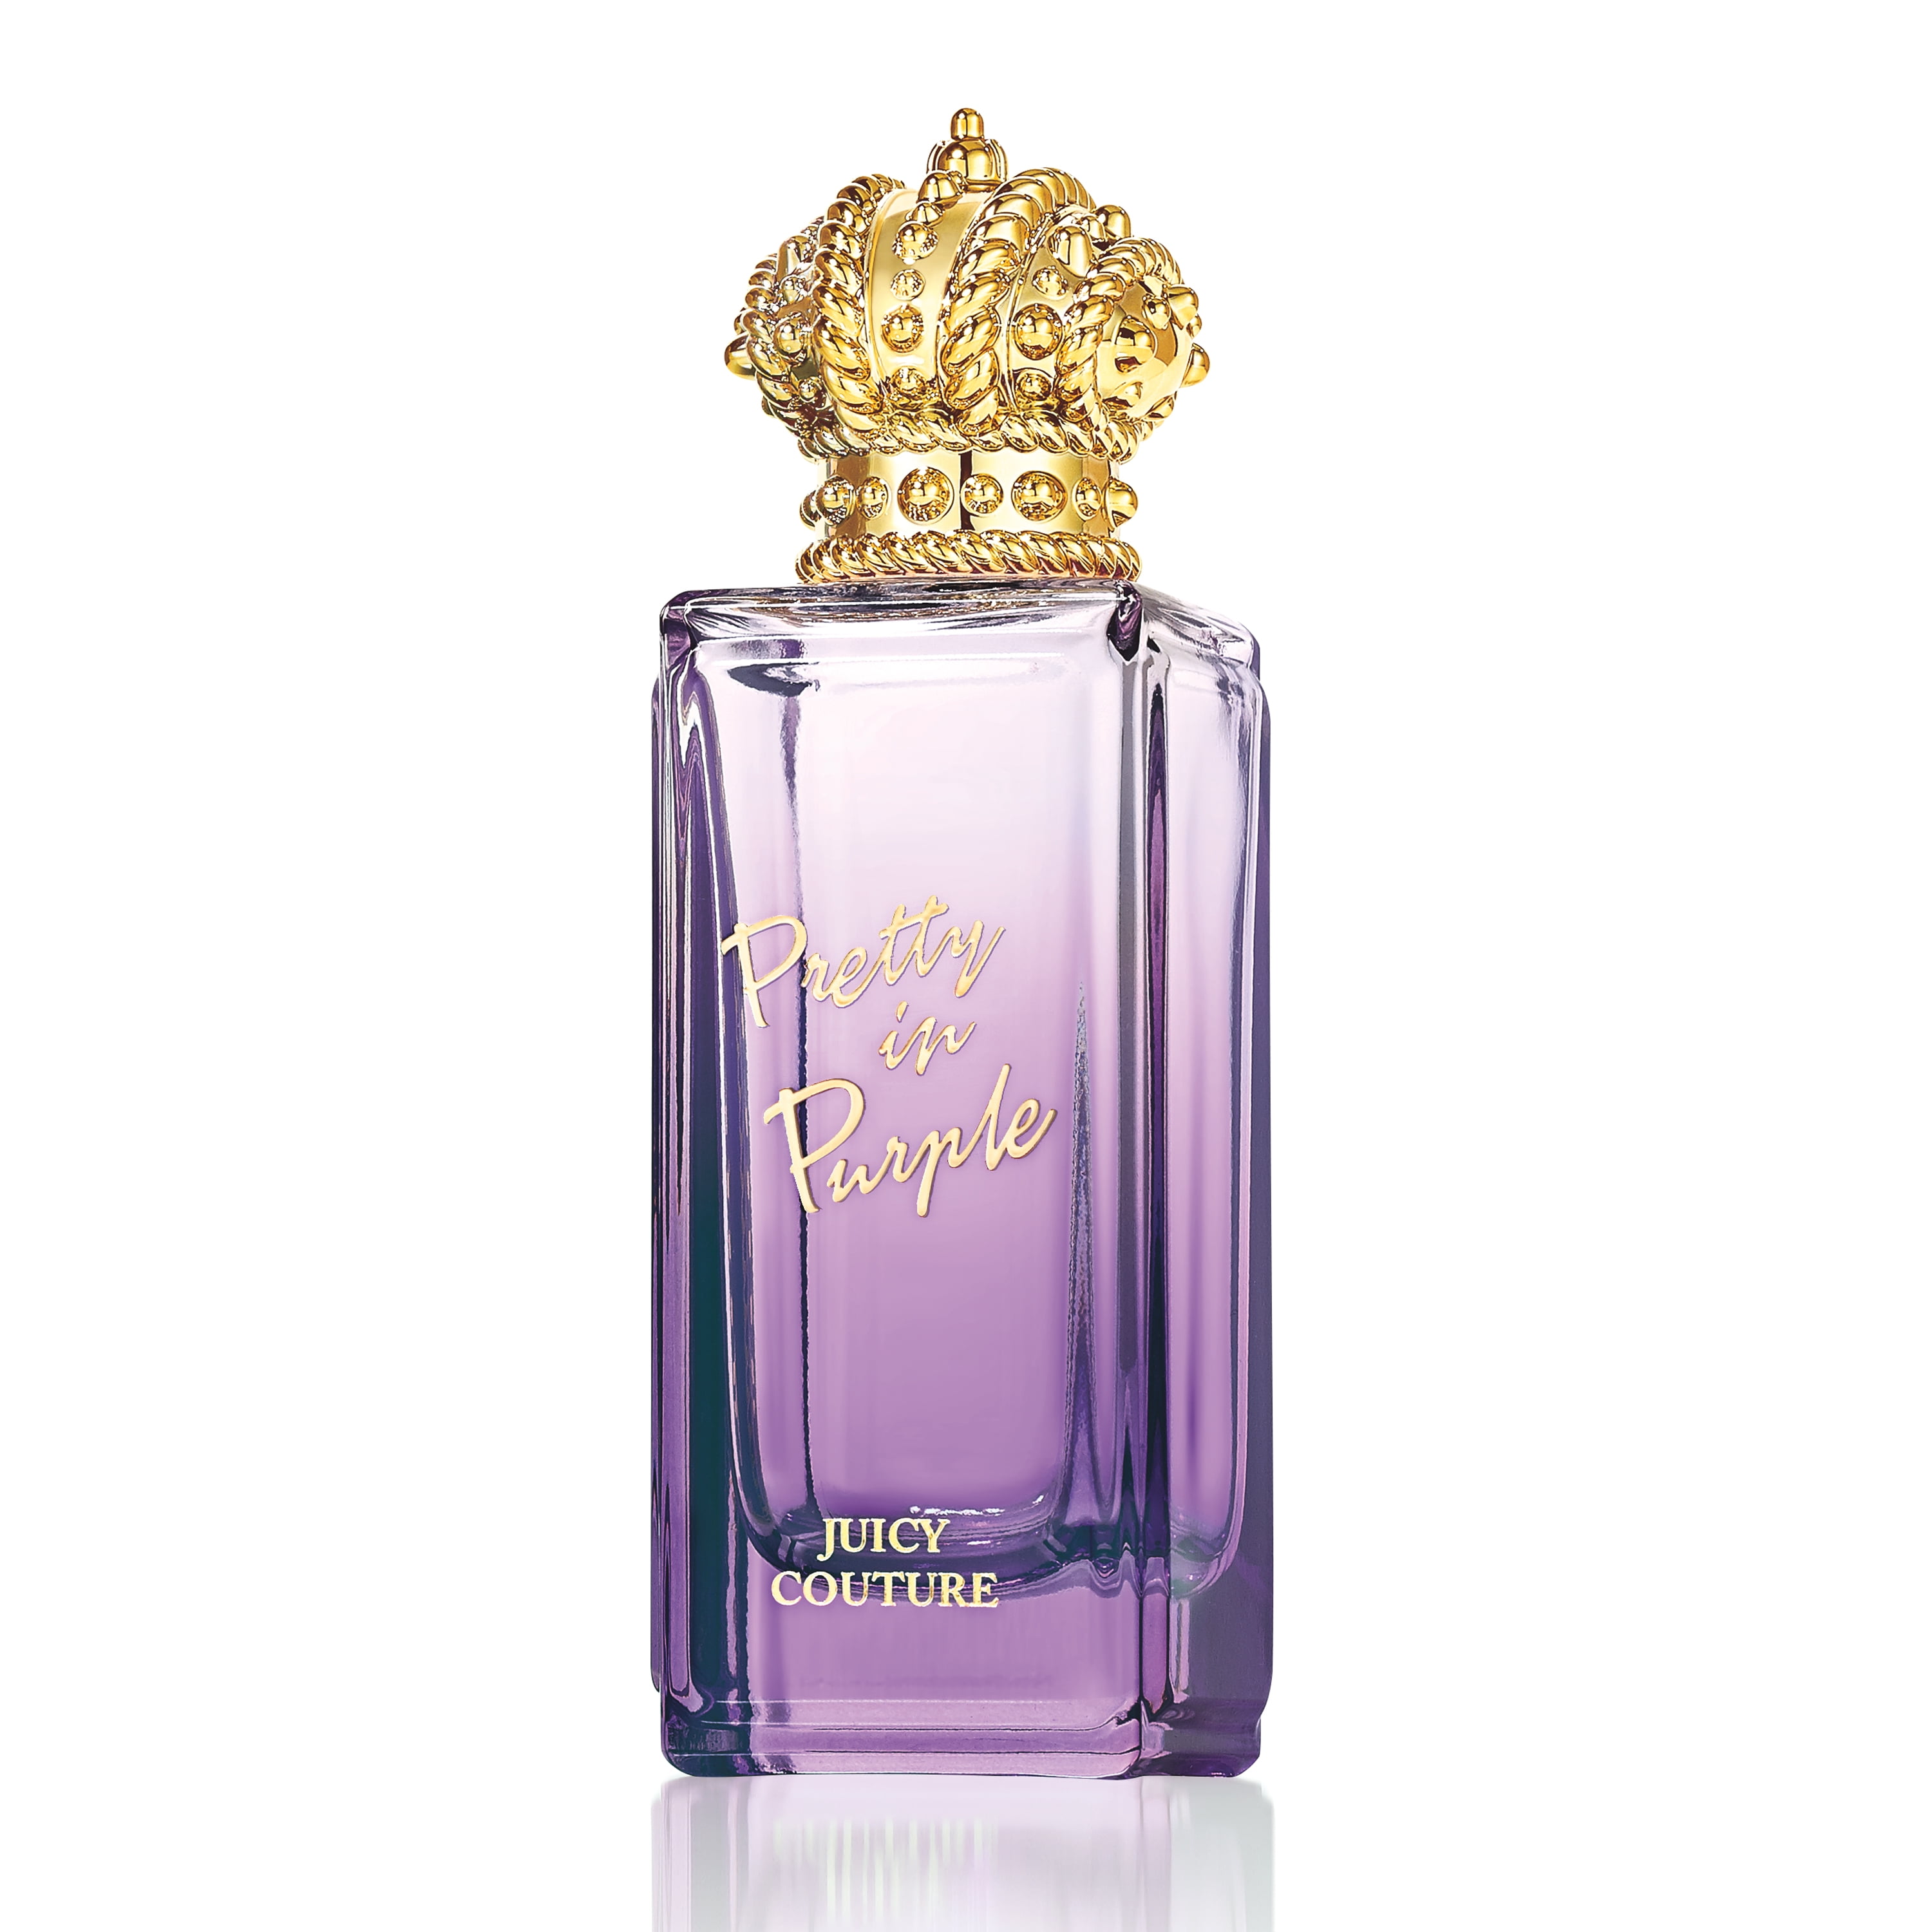 Juicy Couture Pretty in Purple Eau de Toilette Spray, Perfume for Women, 2.5 fl. oz